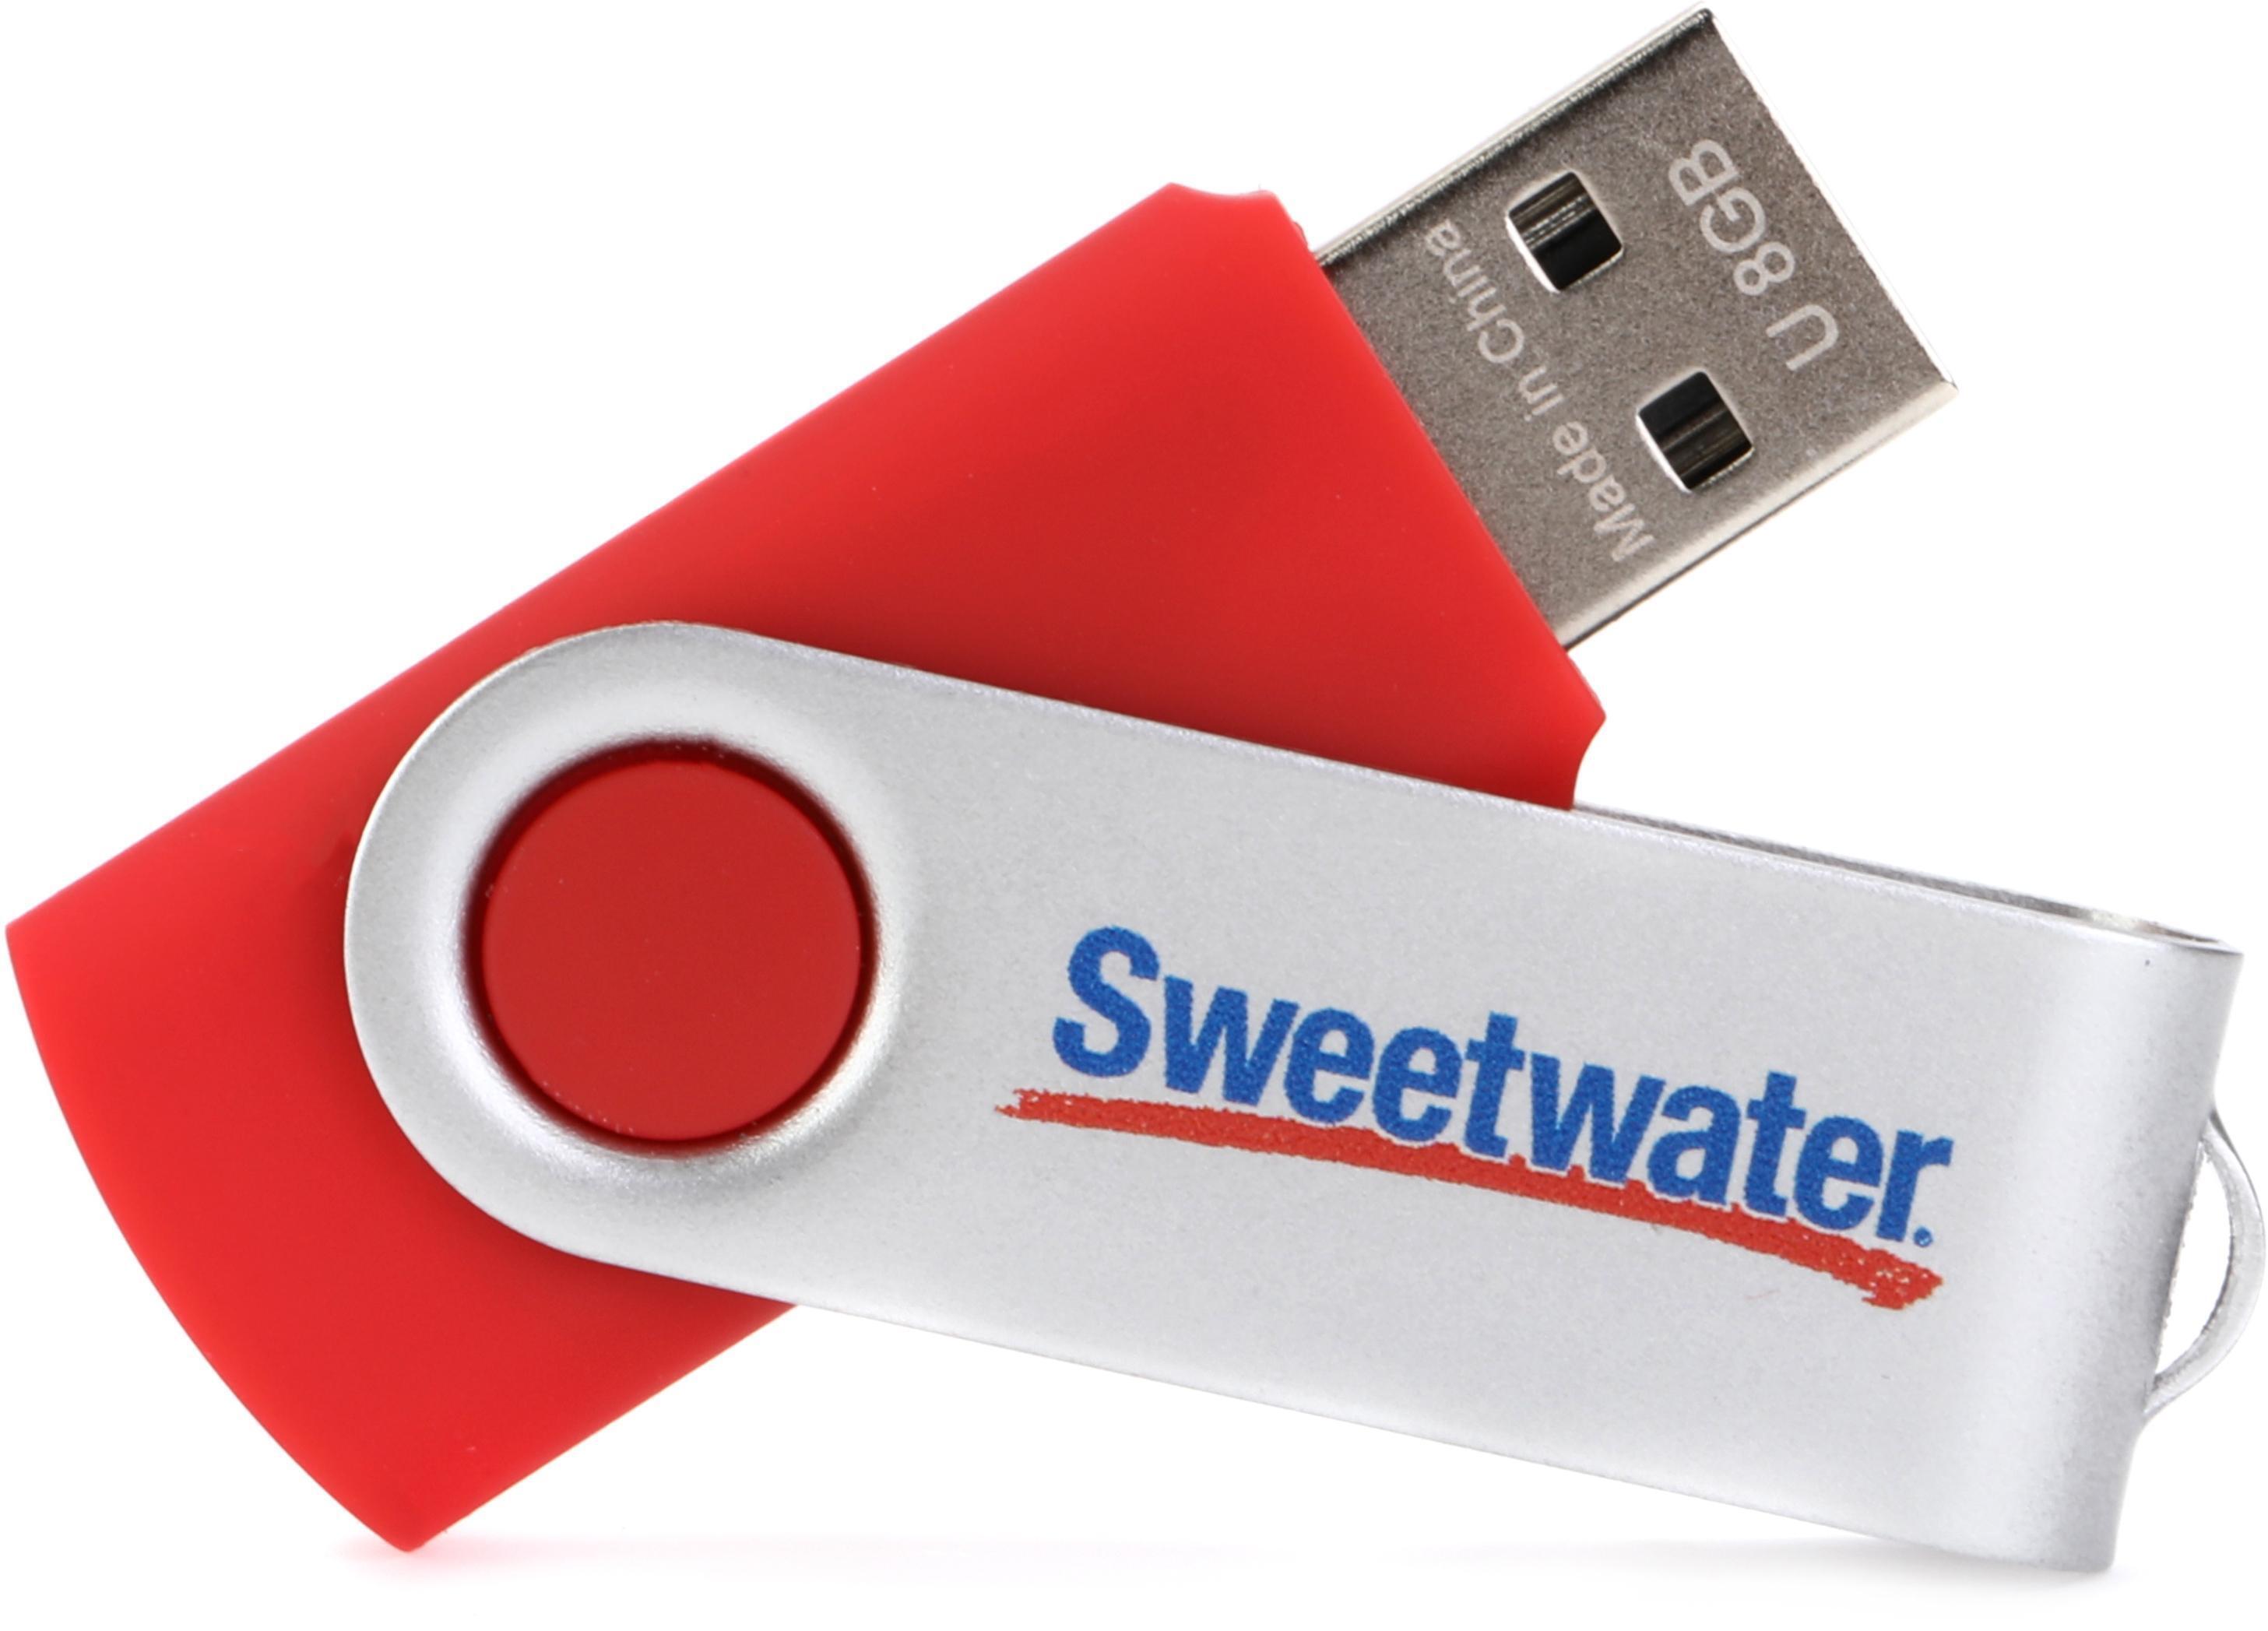 Bundled Item: Sweetwater 8GB USB 2.0 Flash Drive - Red